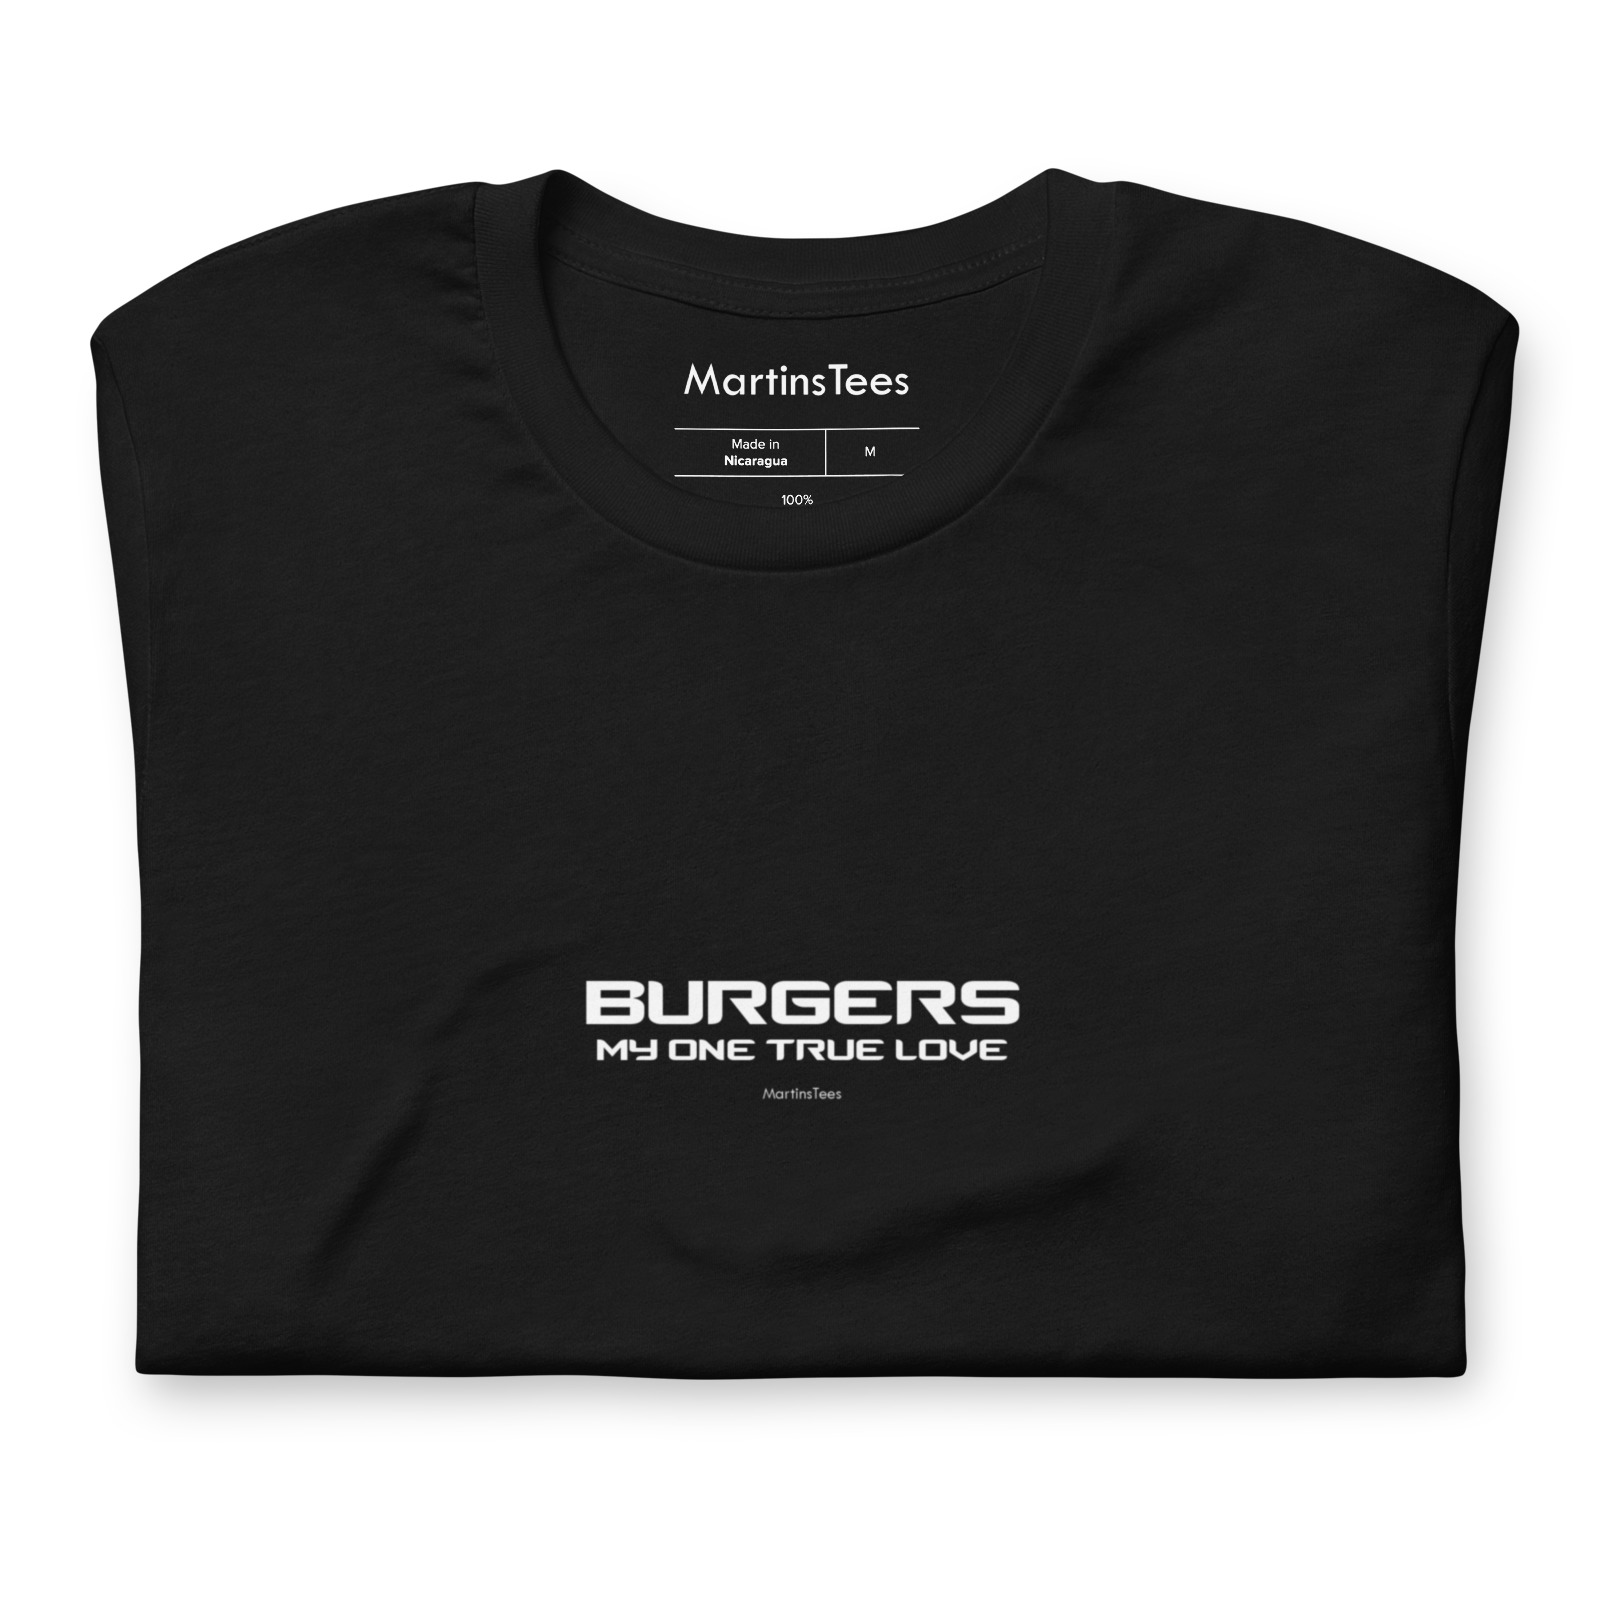 T-shirt: BURGERS - MY ONE TRUE LOVE